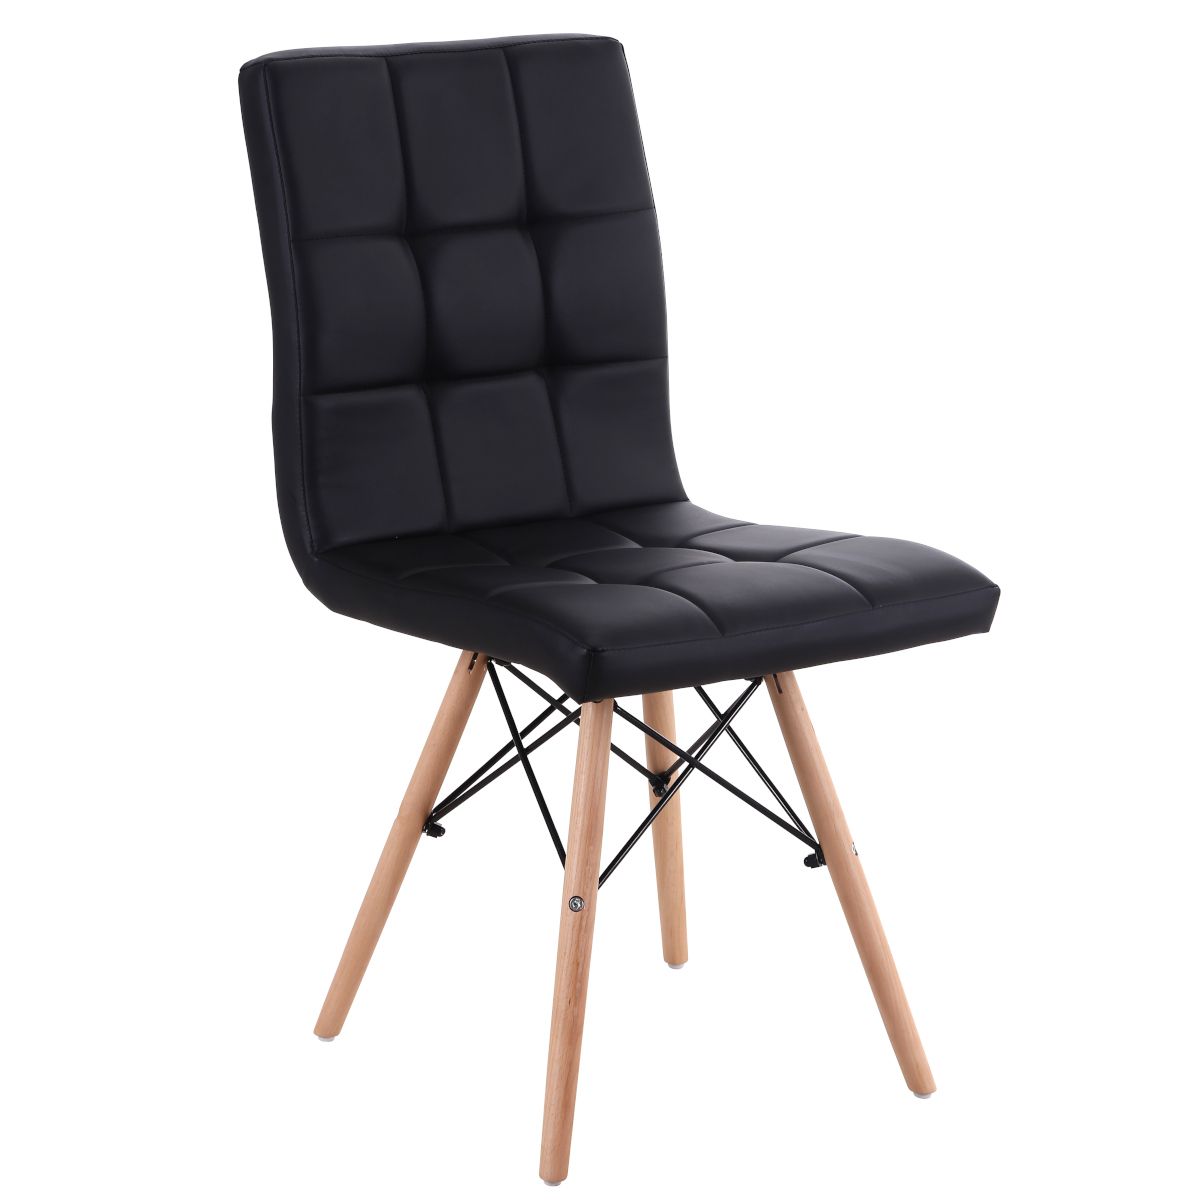 Chair CUPPLESSUS Black PU 43x55x86cm